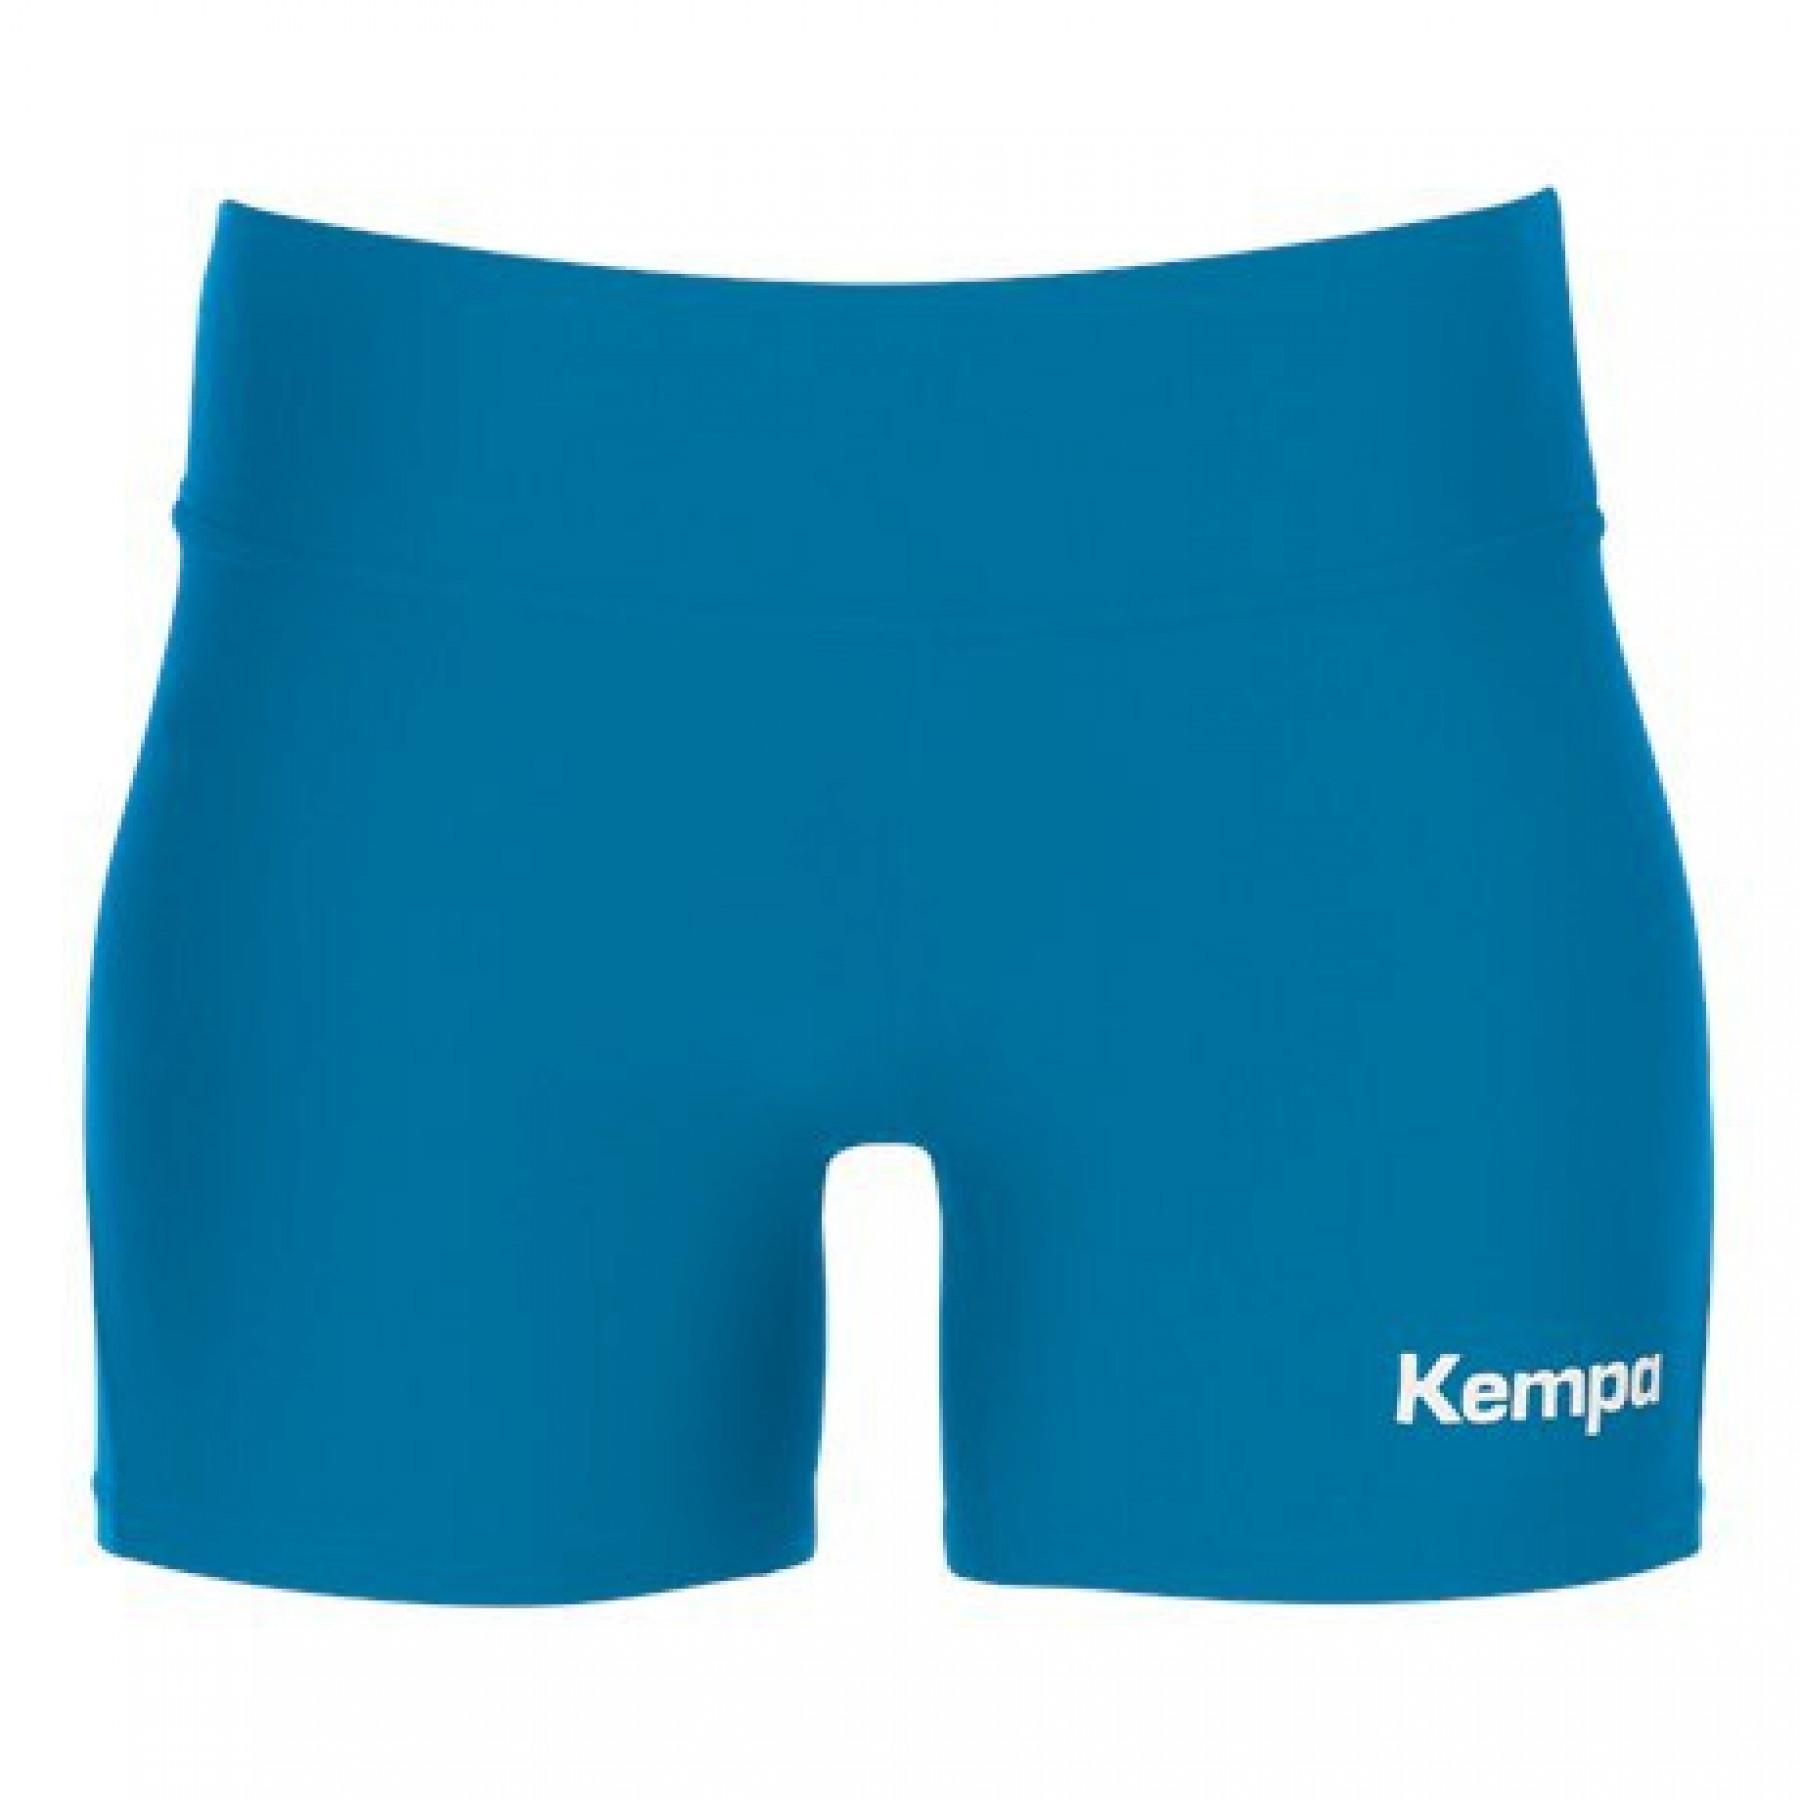 Pantalones cortos de mujer Kempa Performance